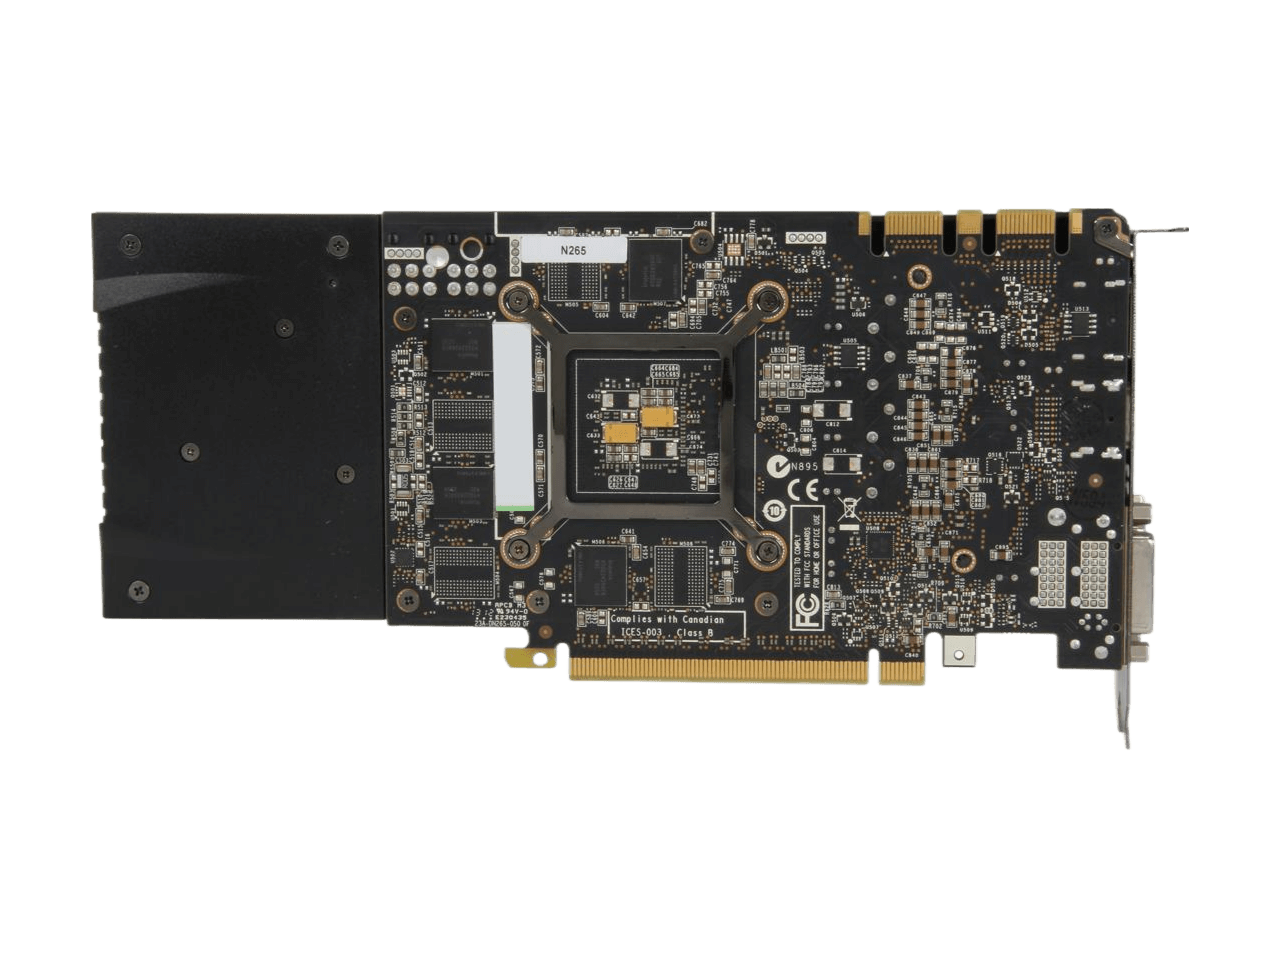 ZOTAC GeForce GTX 760 2GB GDDR5 PCI Express 3.0 x16 SLI Support Video Card ZT-70401-10P